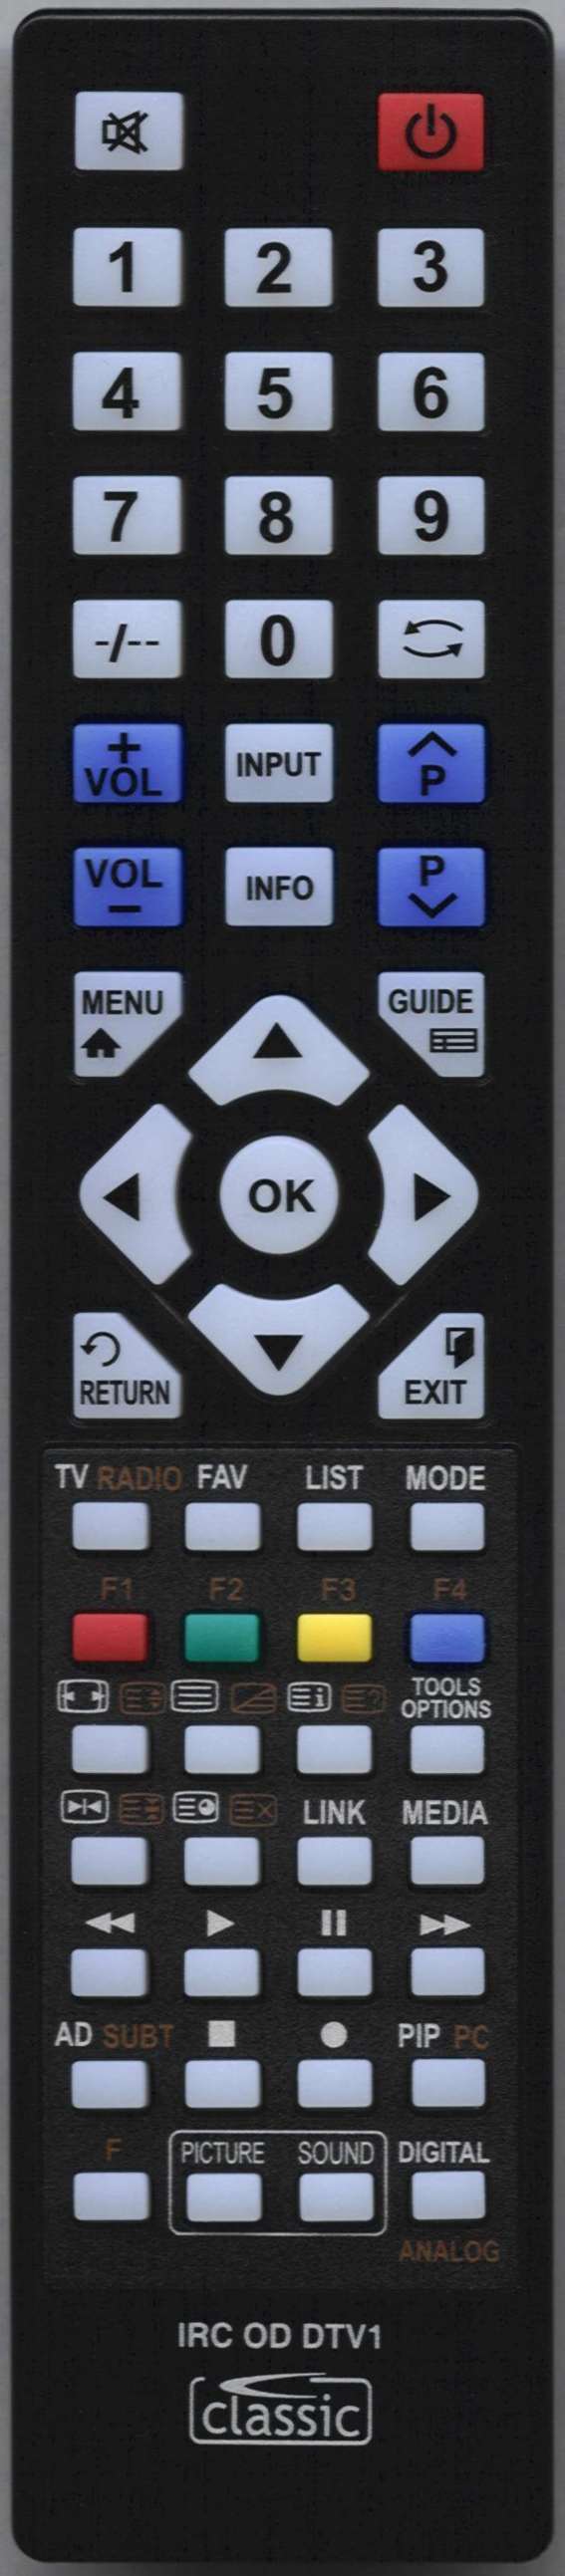 JVC RM-C3338 Remote Control